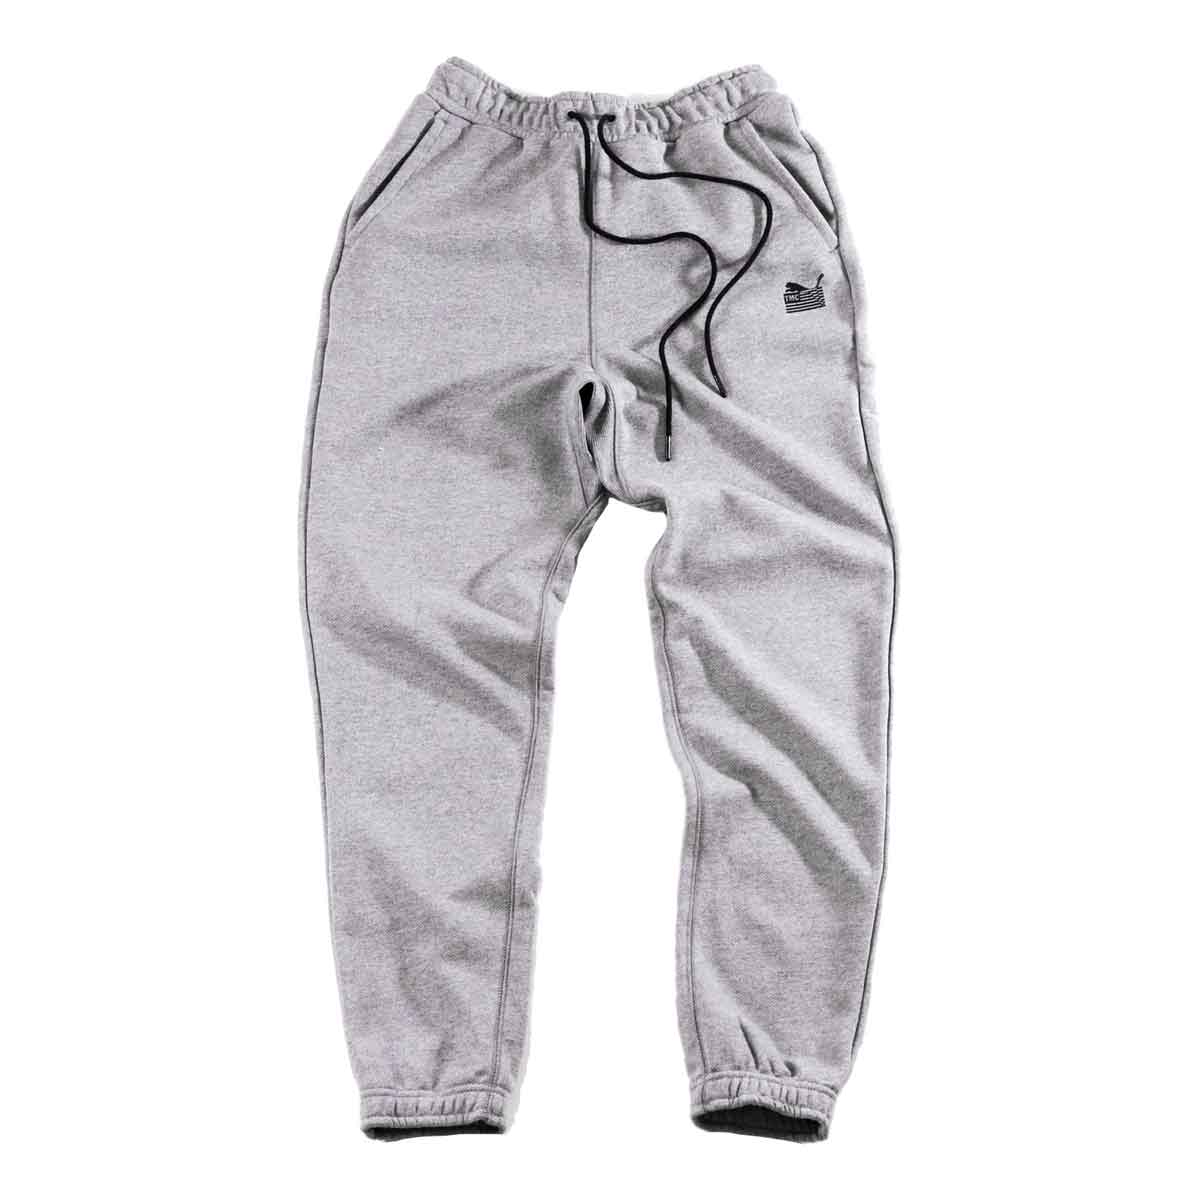 PUMA x TMC Everyday Hussle Collection Sweatpants - Heather Grey